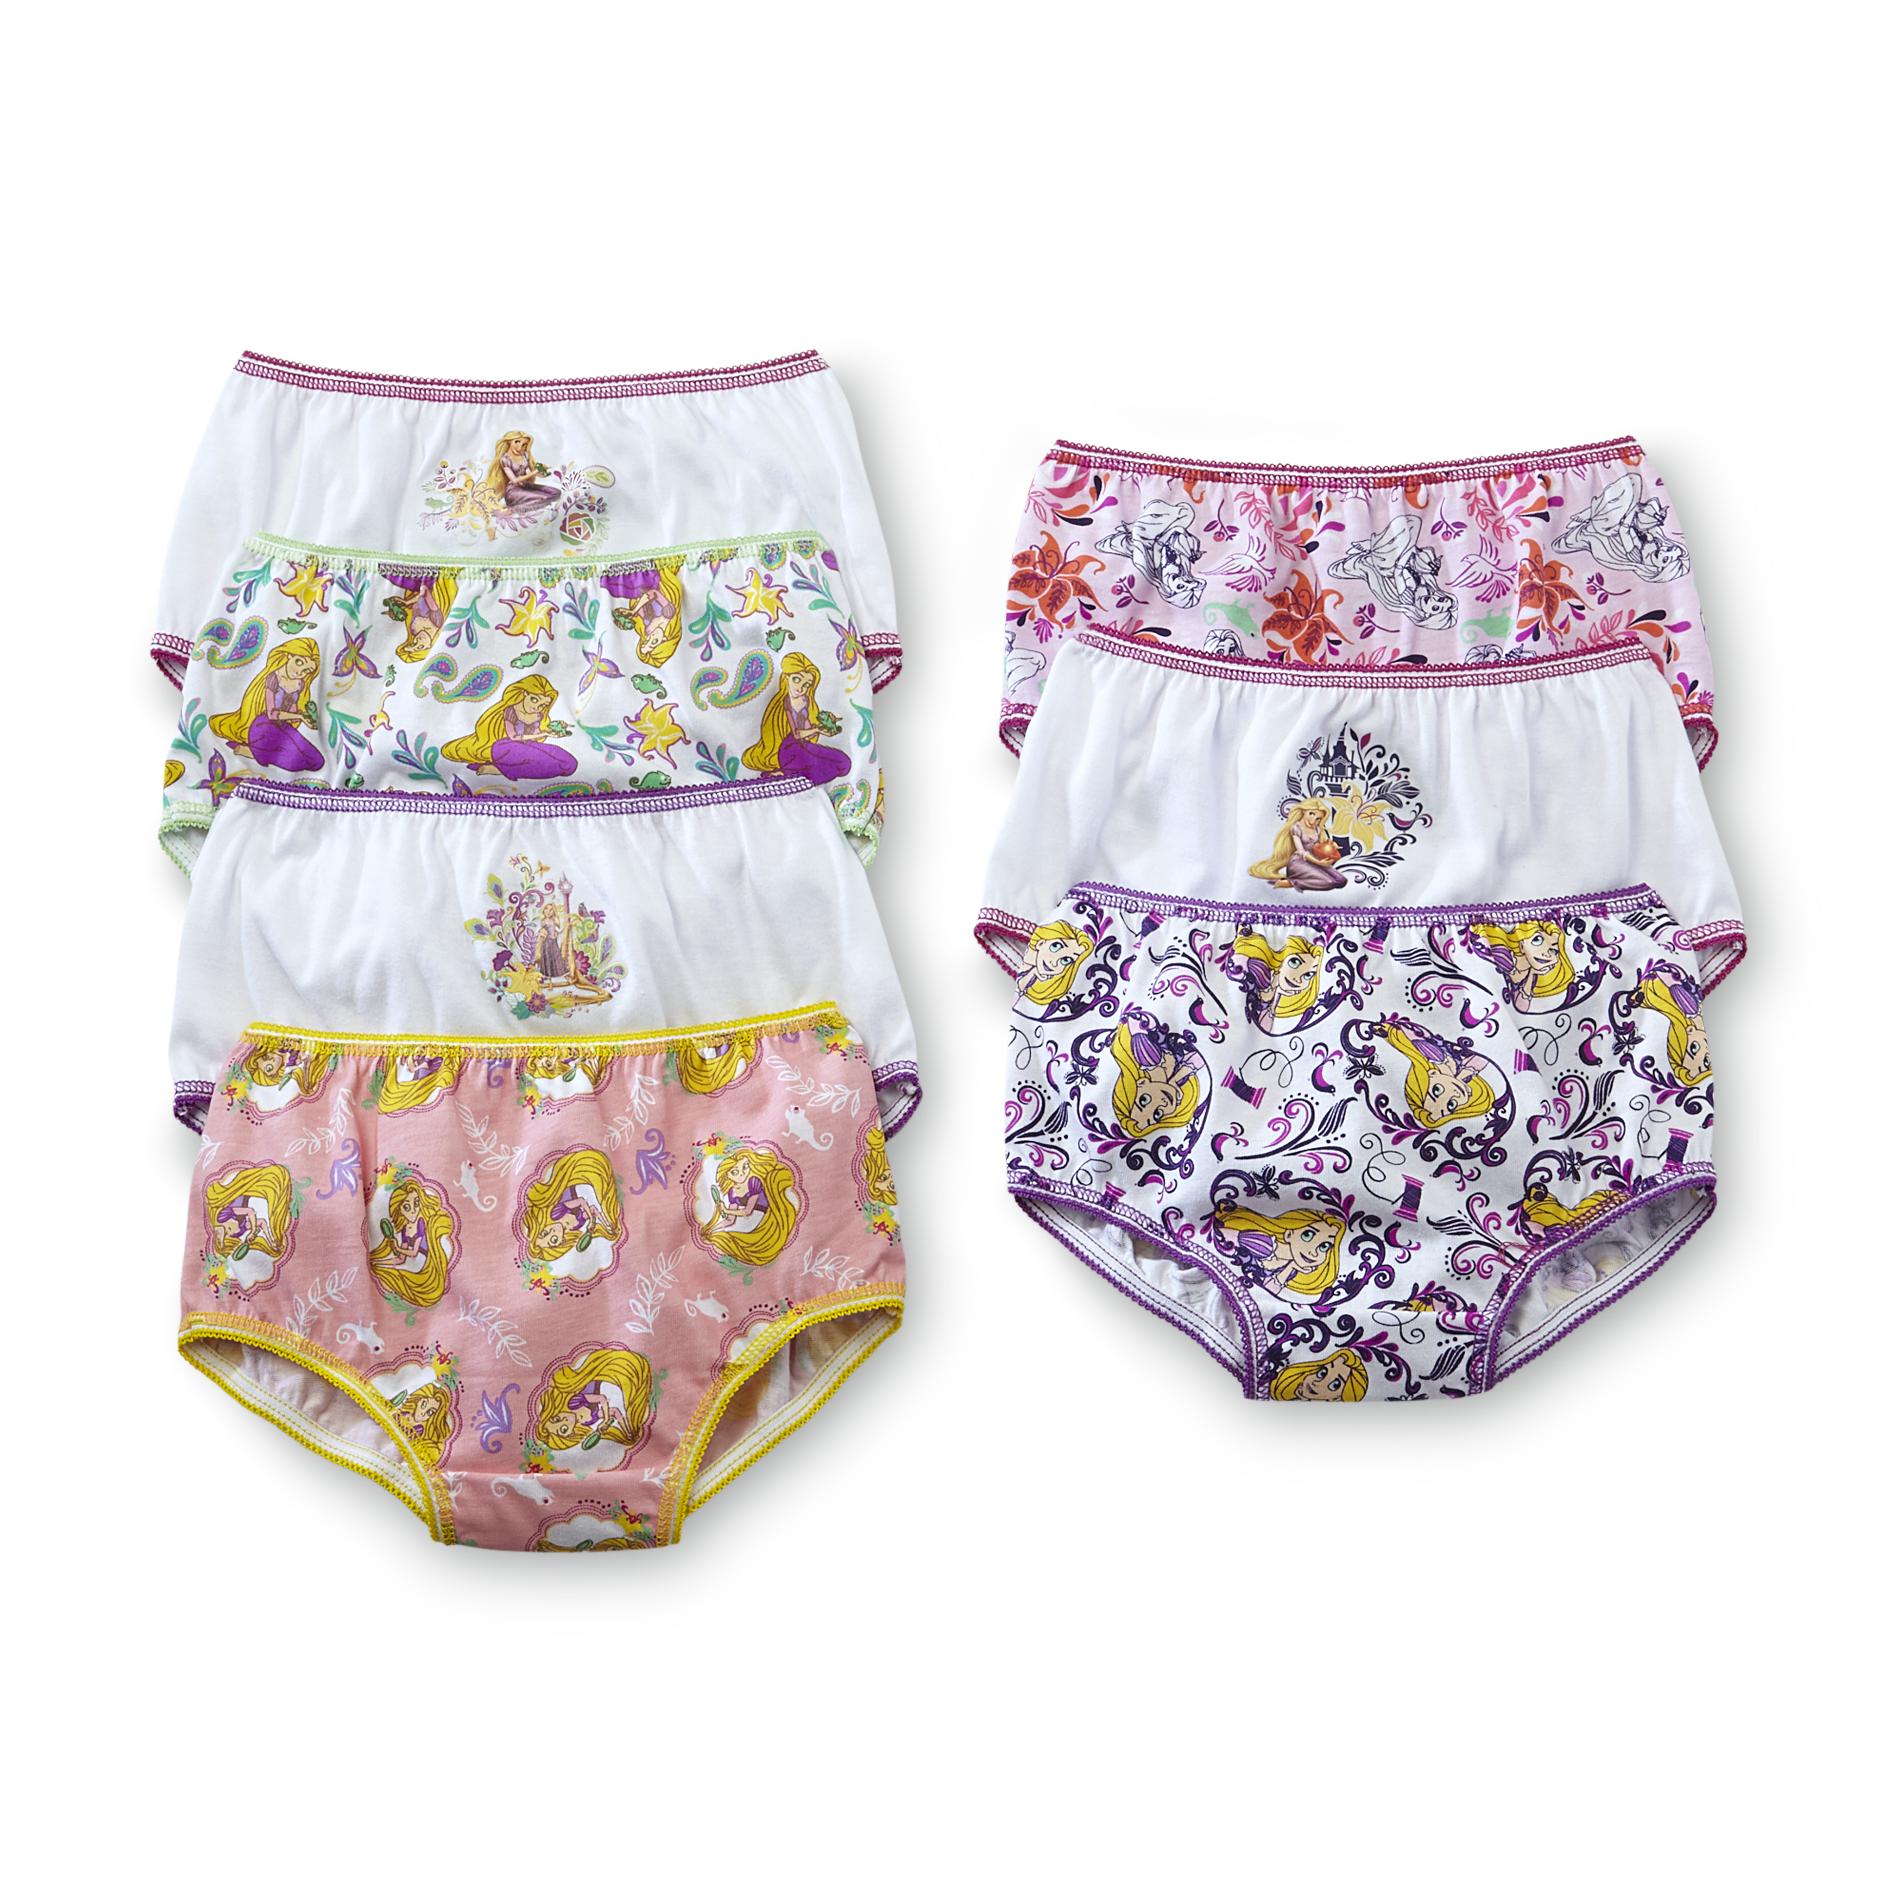 Disney Tangled Toddler Girl's 7-Pack Panties - Rapunzel